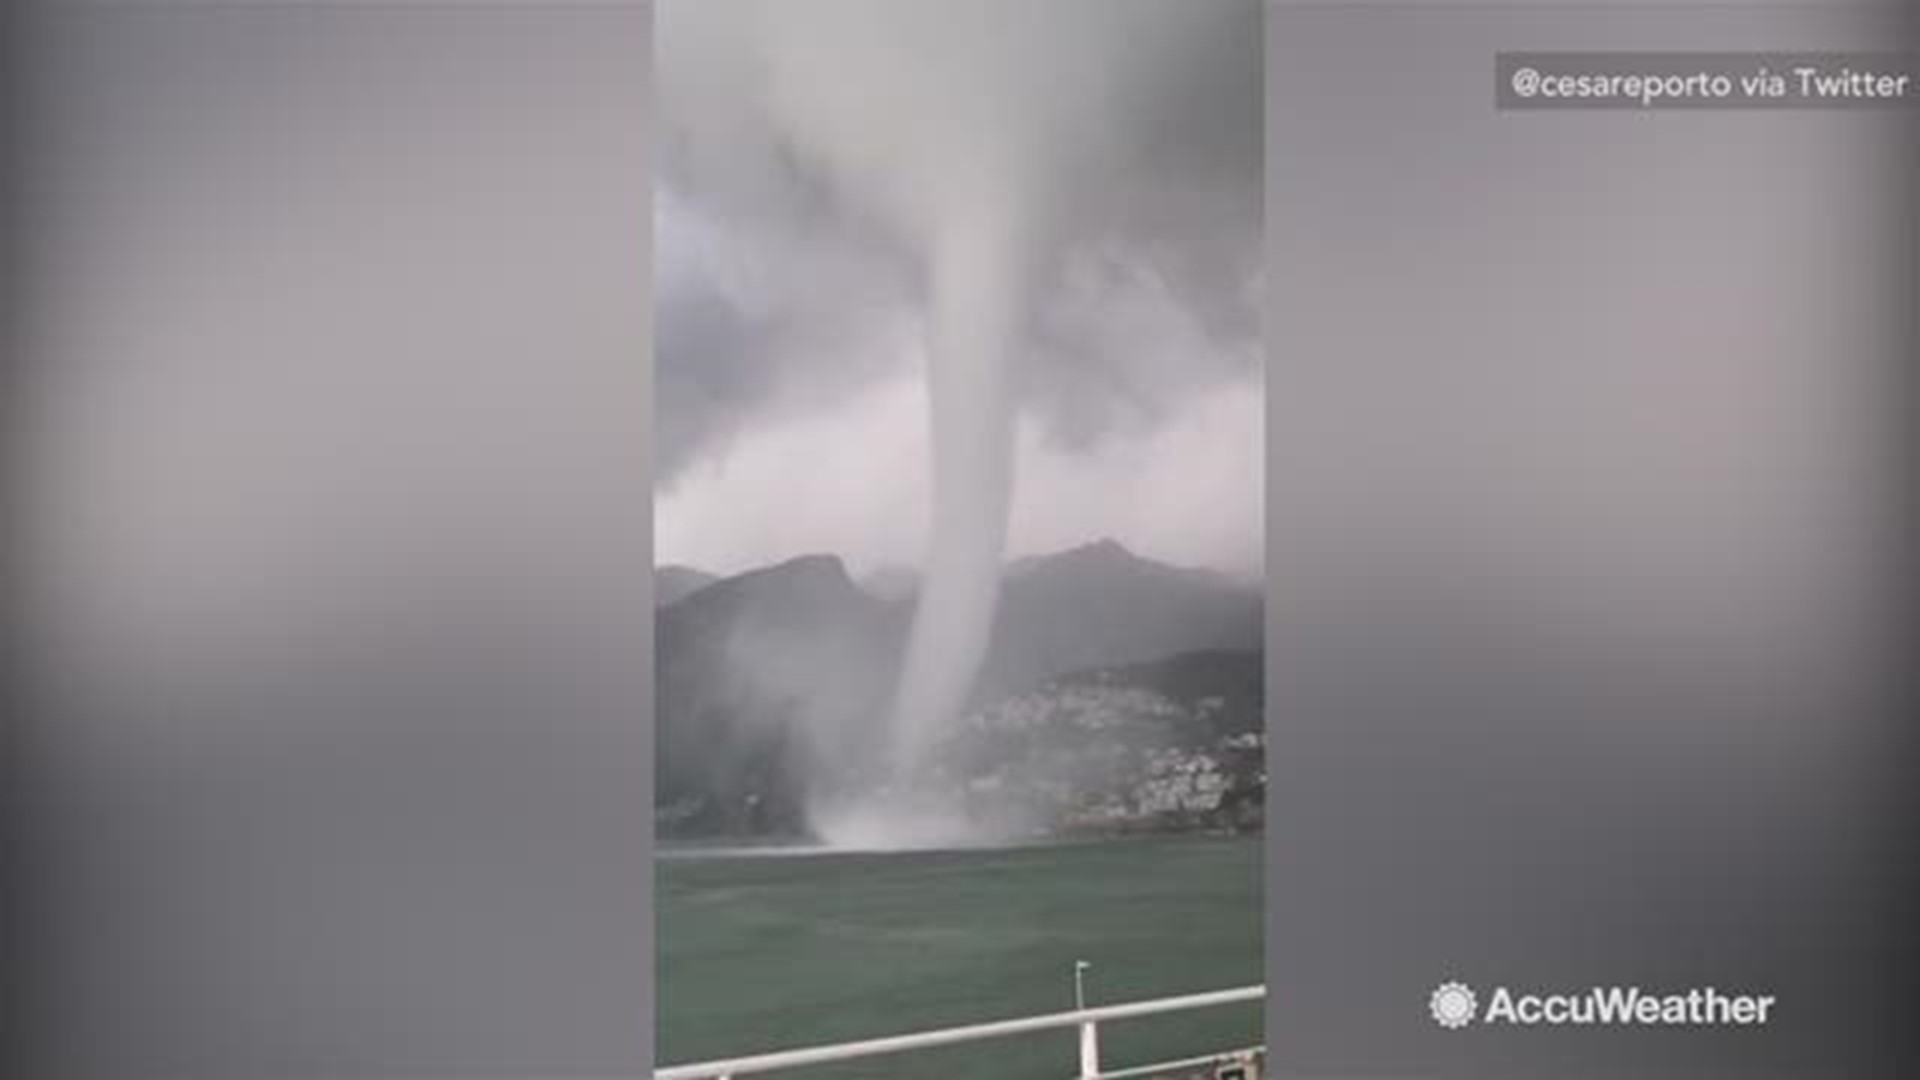 A tornado was filmed spinning through the Amalfi Coast of Italy on Nov. 20.